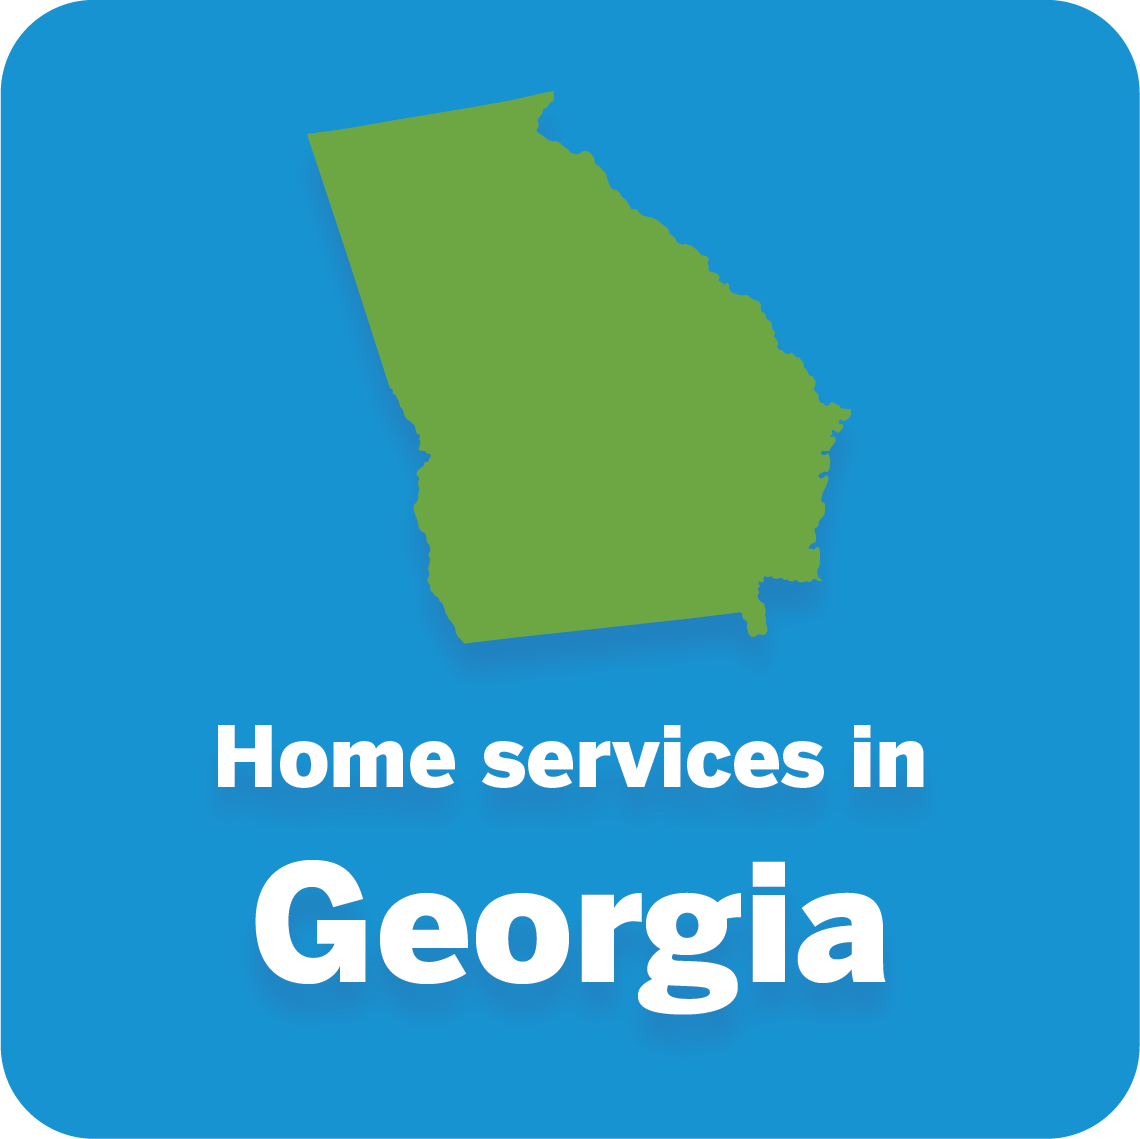 Home Services in Georgia